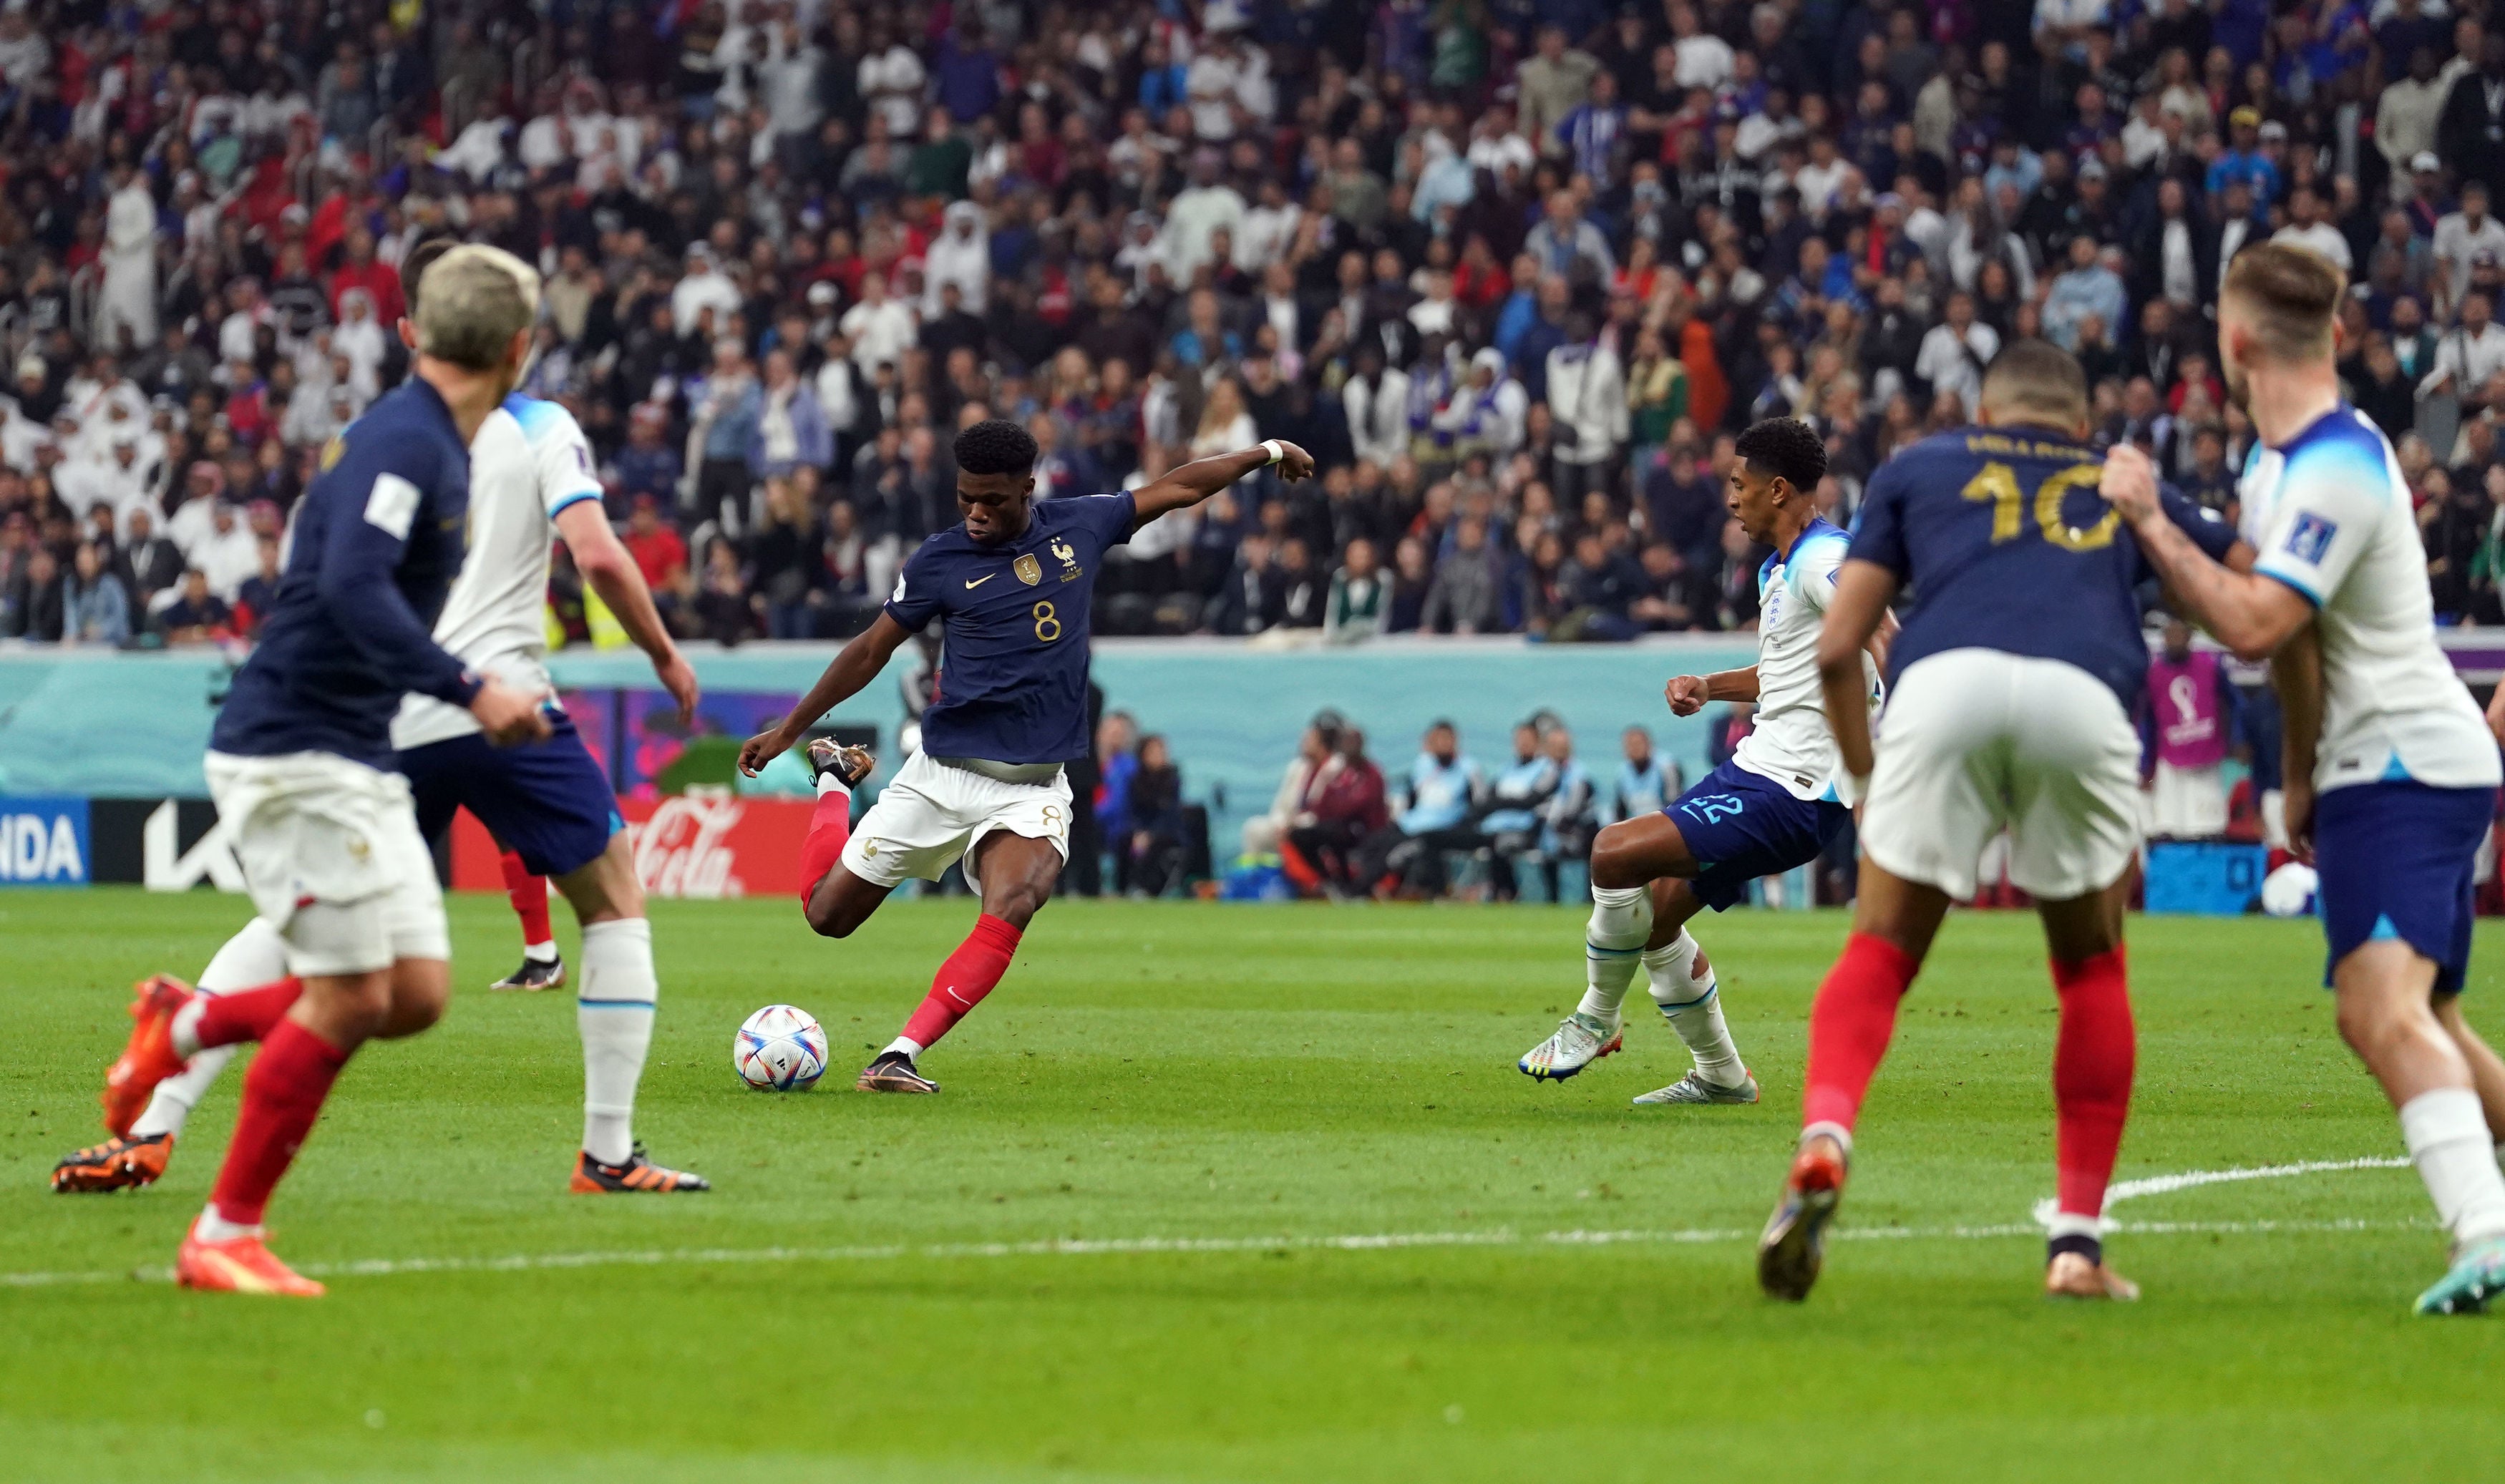 France's Aurelien Tchouameni scores the opening goal during the FIFA World Cup Quarter-Final match at the Al Bayt Stadium